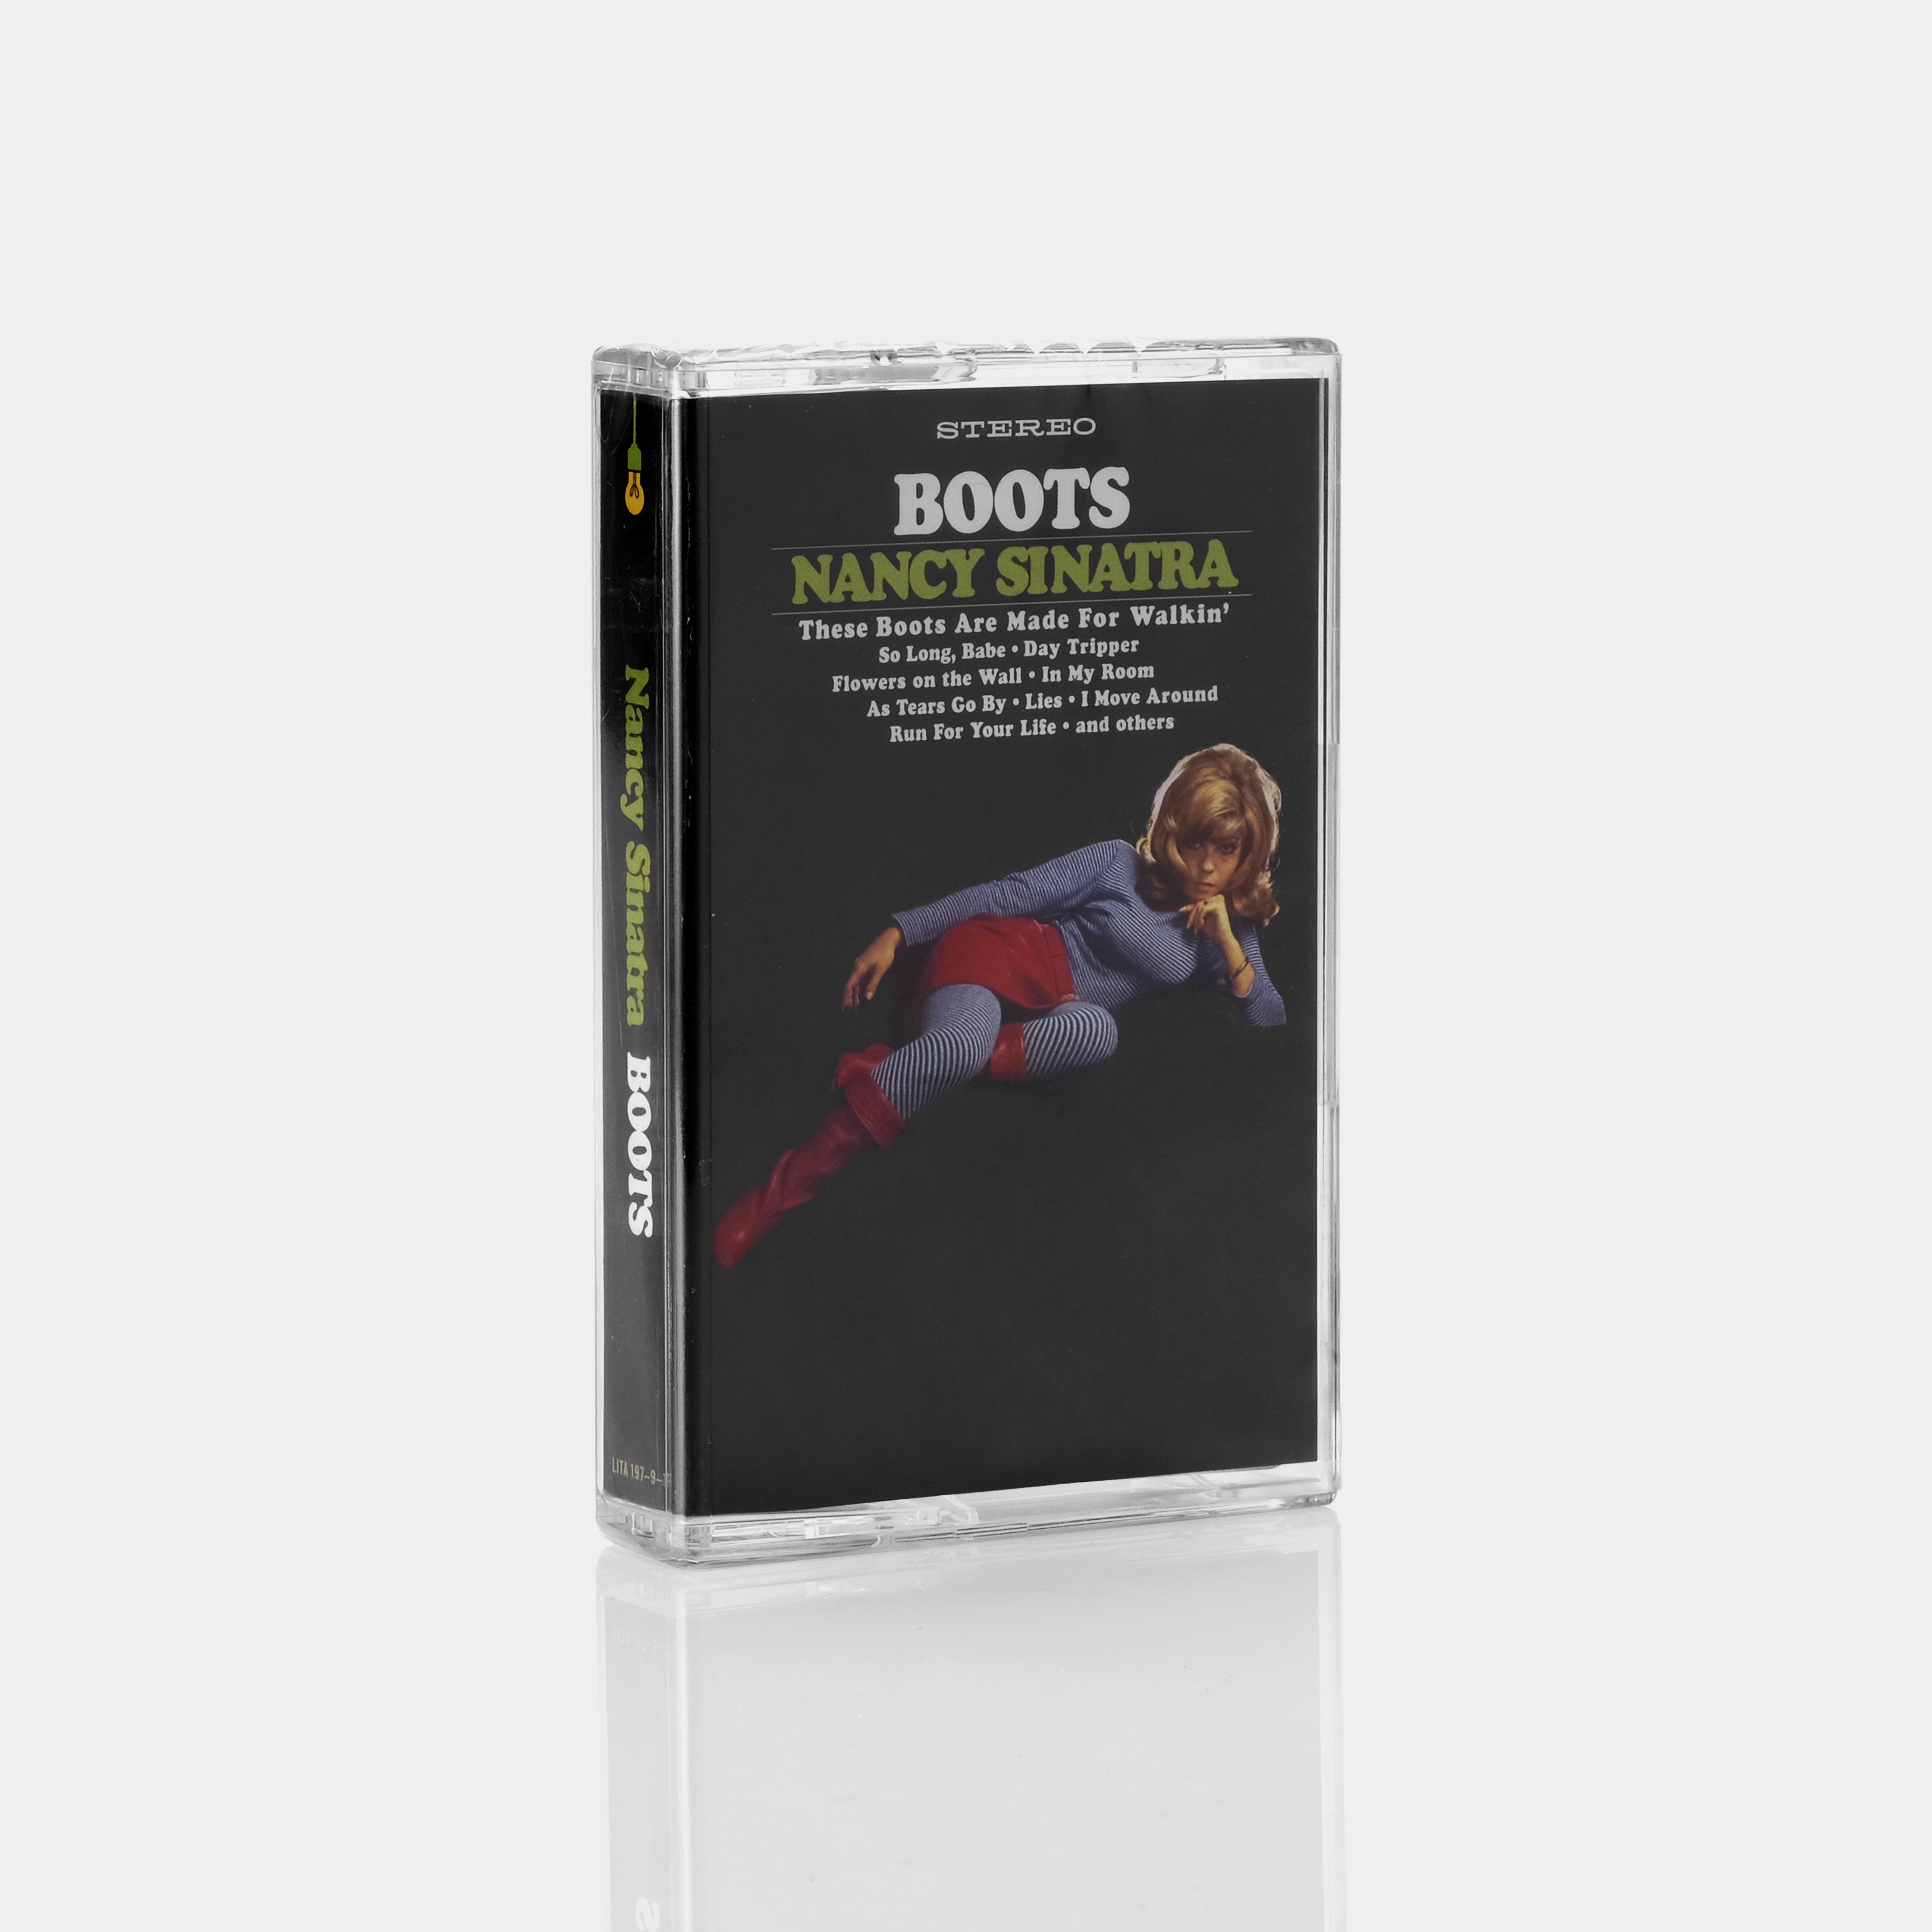 Nancy Sinatra - Boots Cassette Tape